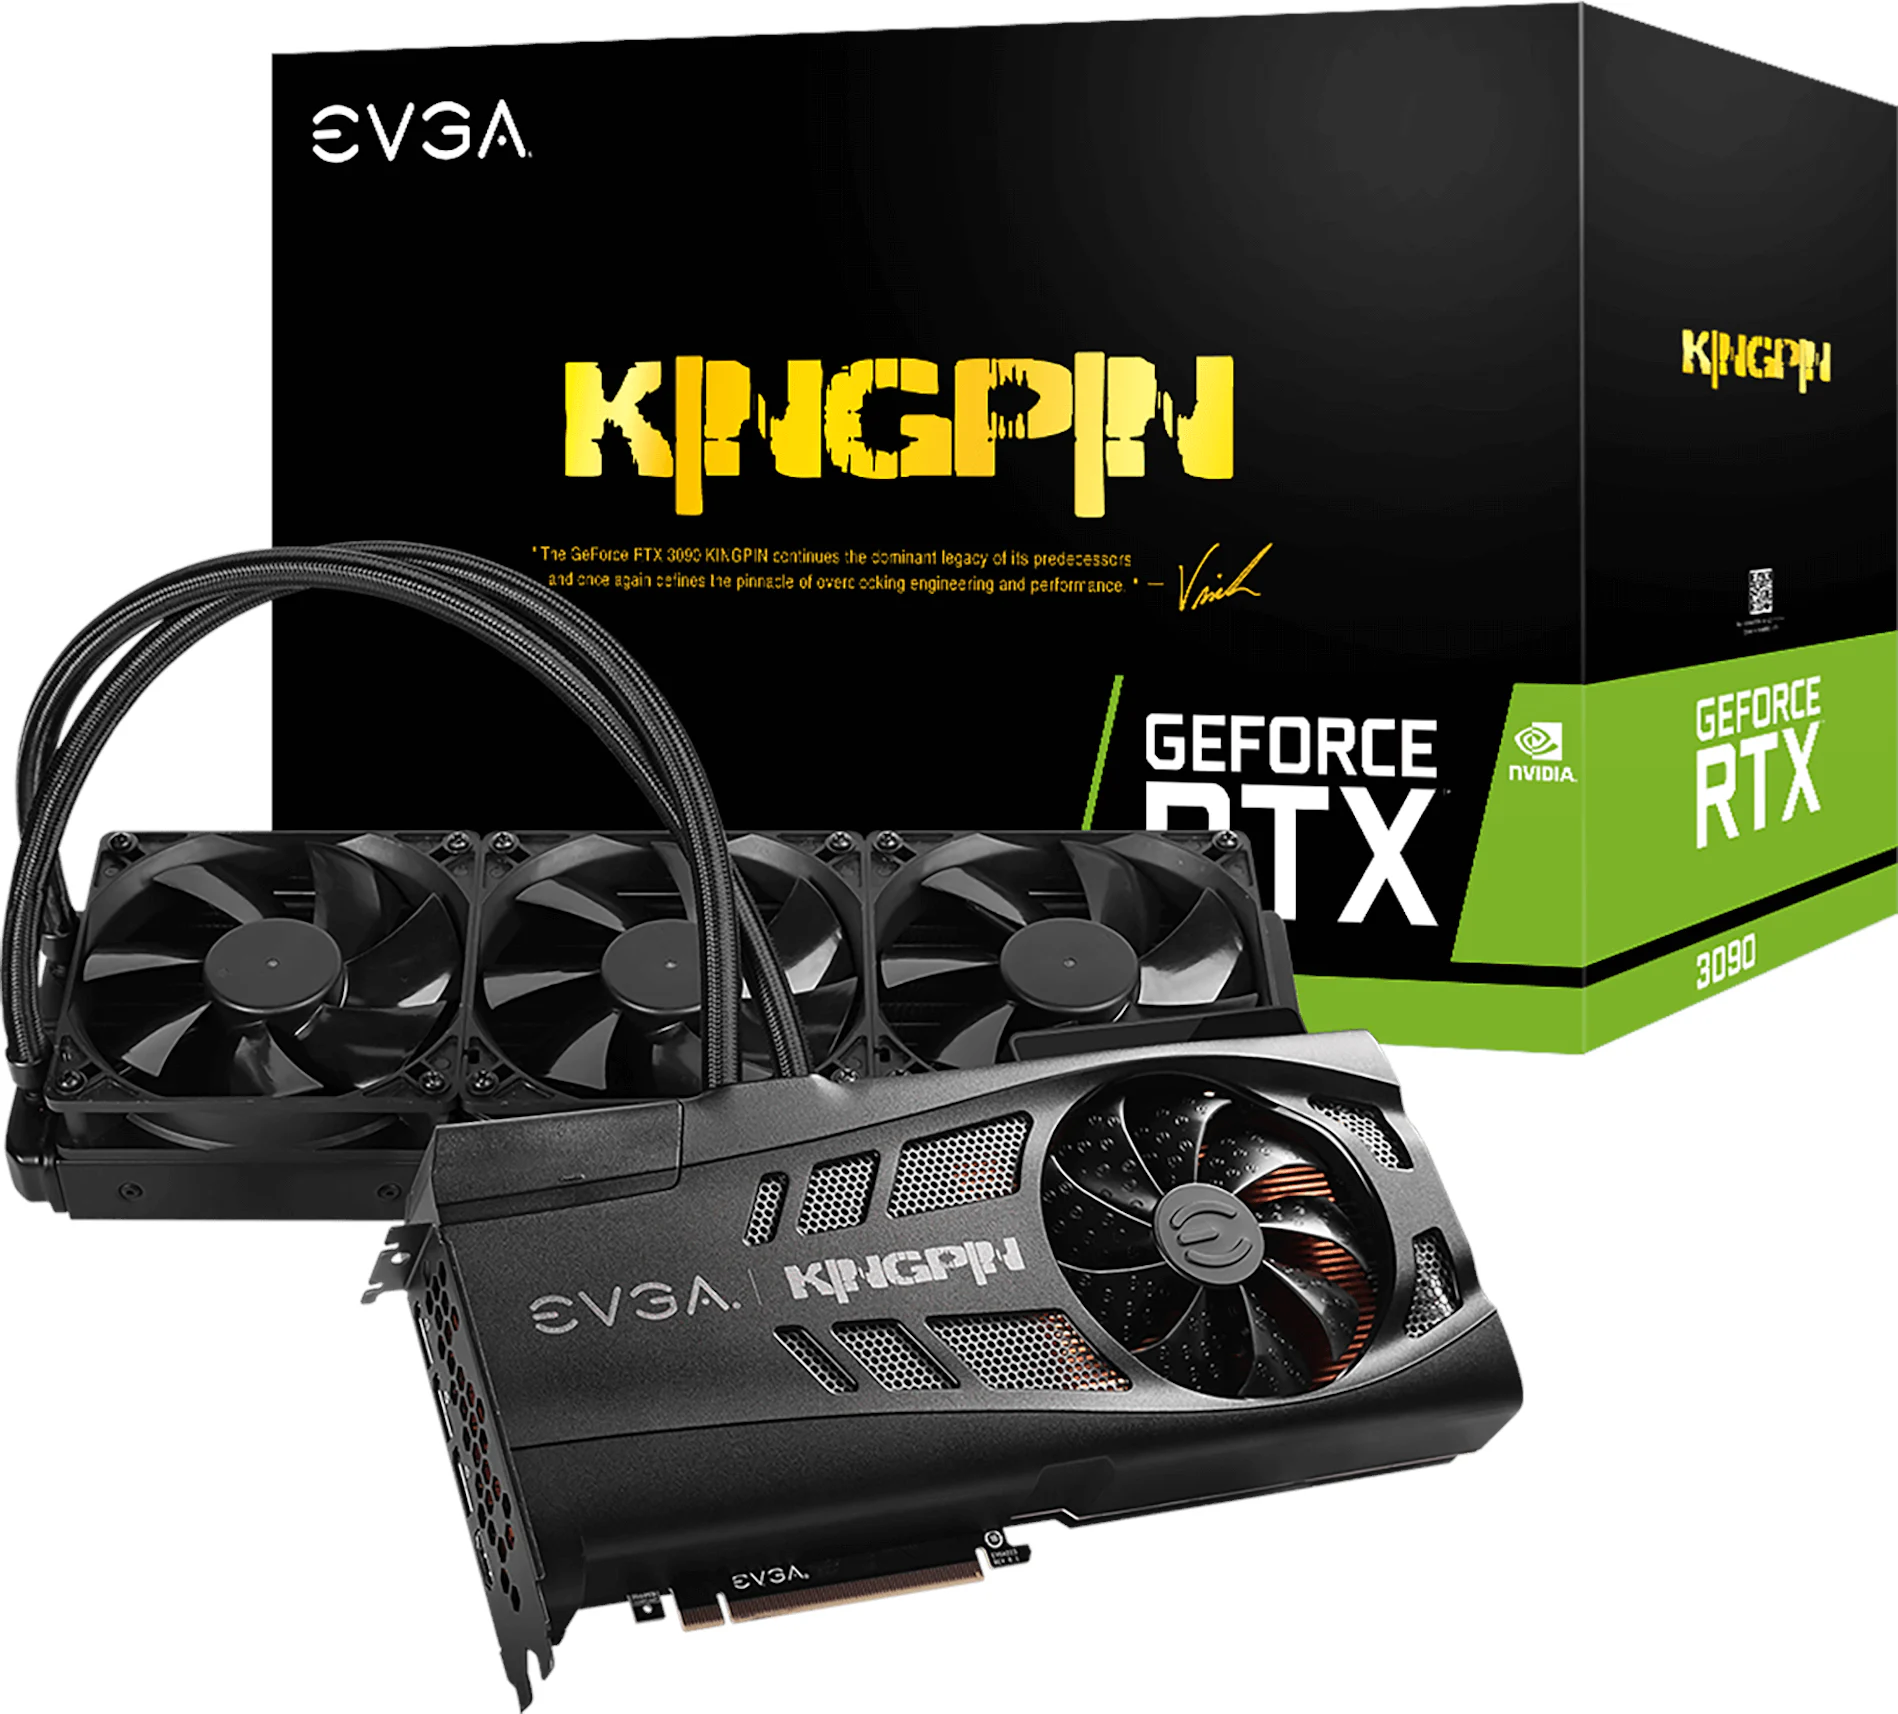 NVIDIA EVGA GeForce RTX 3090 KINGPIN HYBRID GAMING with 